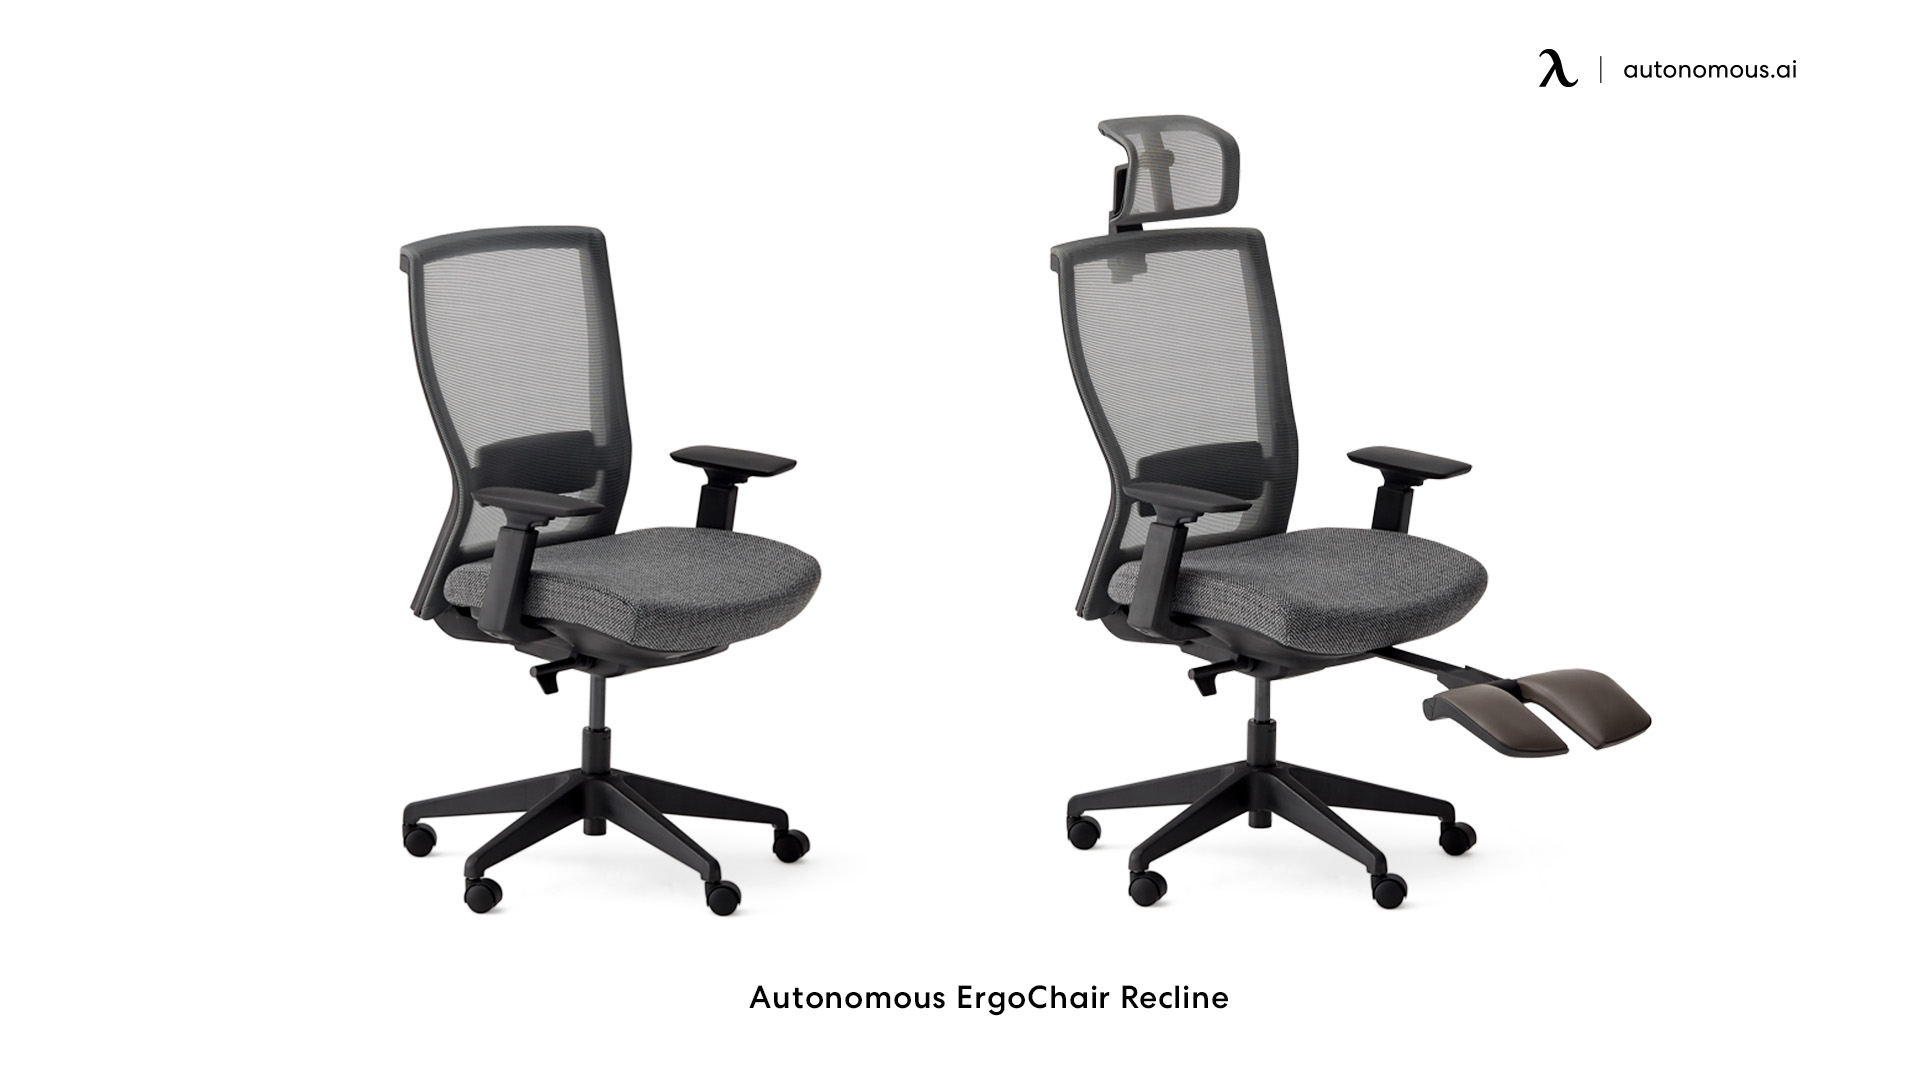 Autonomous ErgoChair Recline straight back office chair